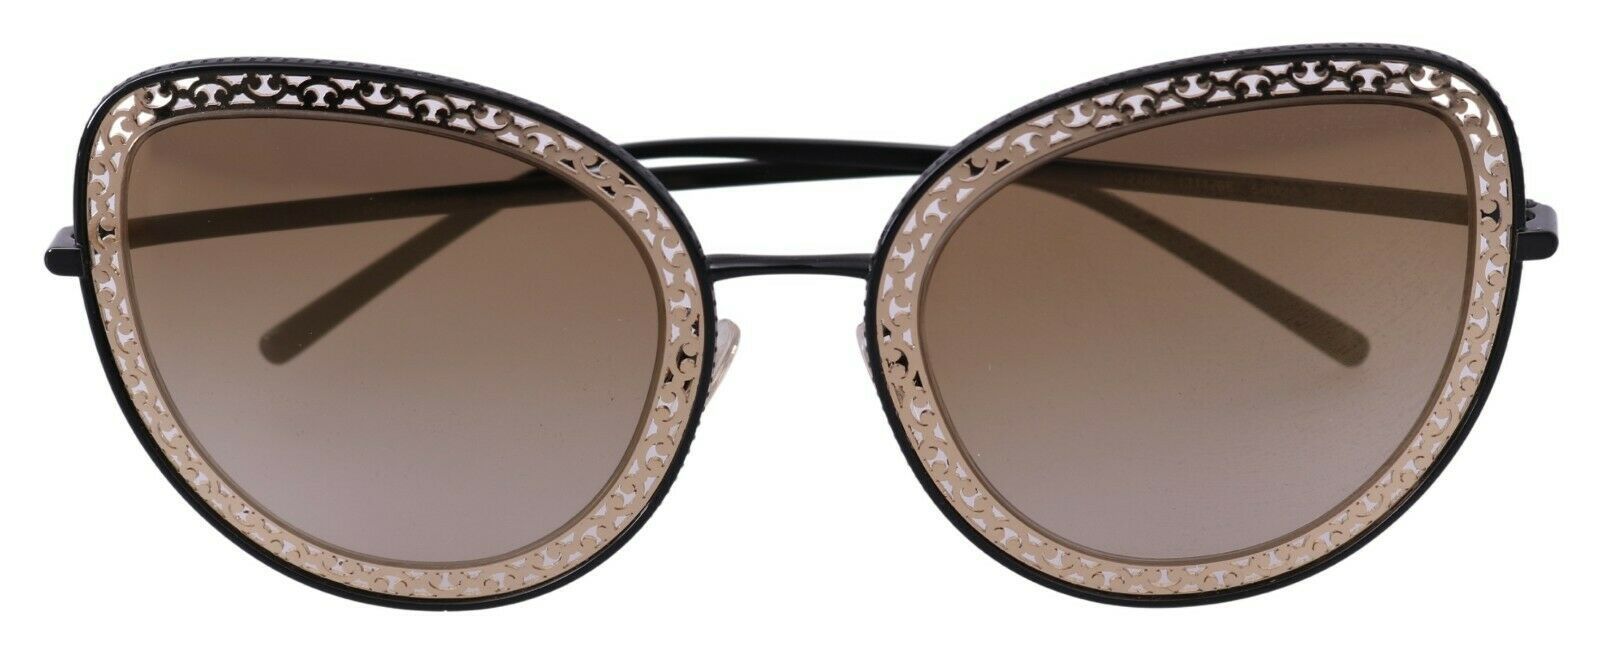 Black Gold DG2225 Oval Metal Lace Sunglasses